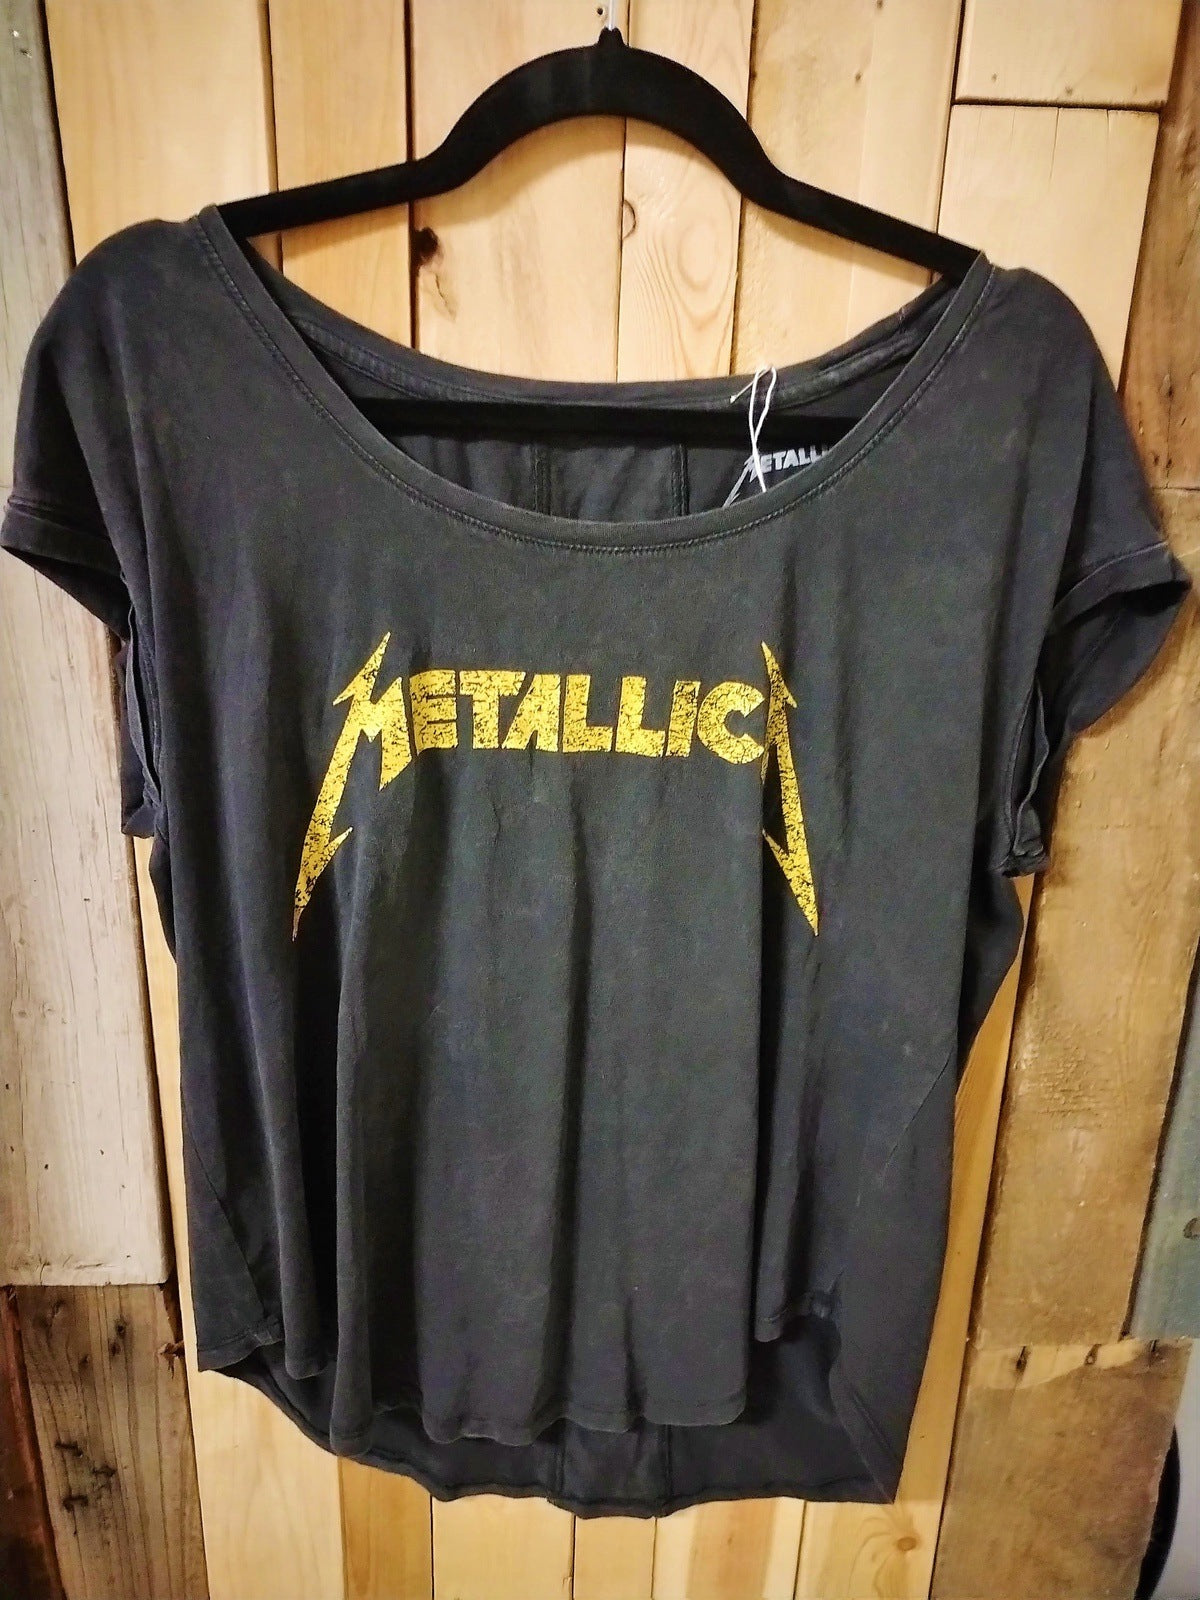 Metallica Women's Medium Tee Shirt